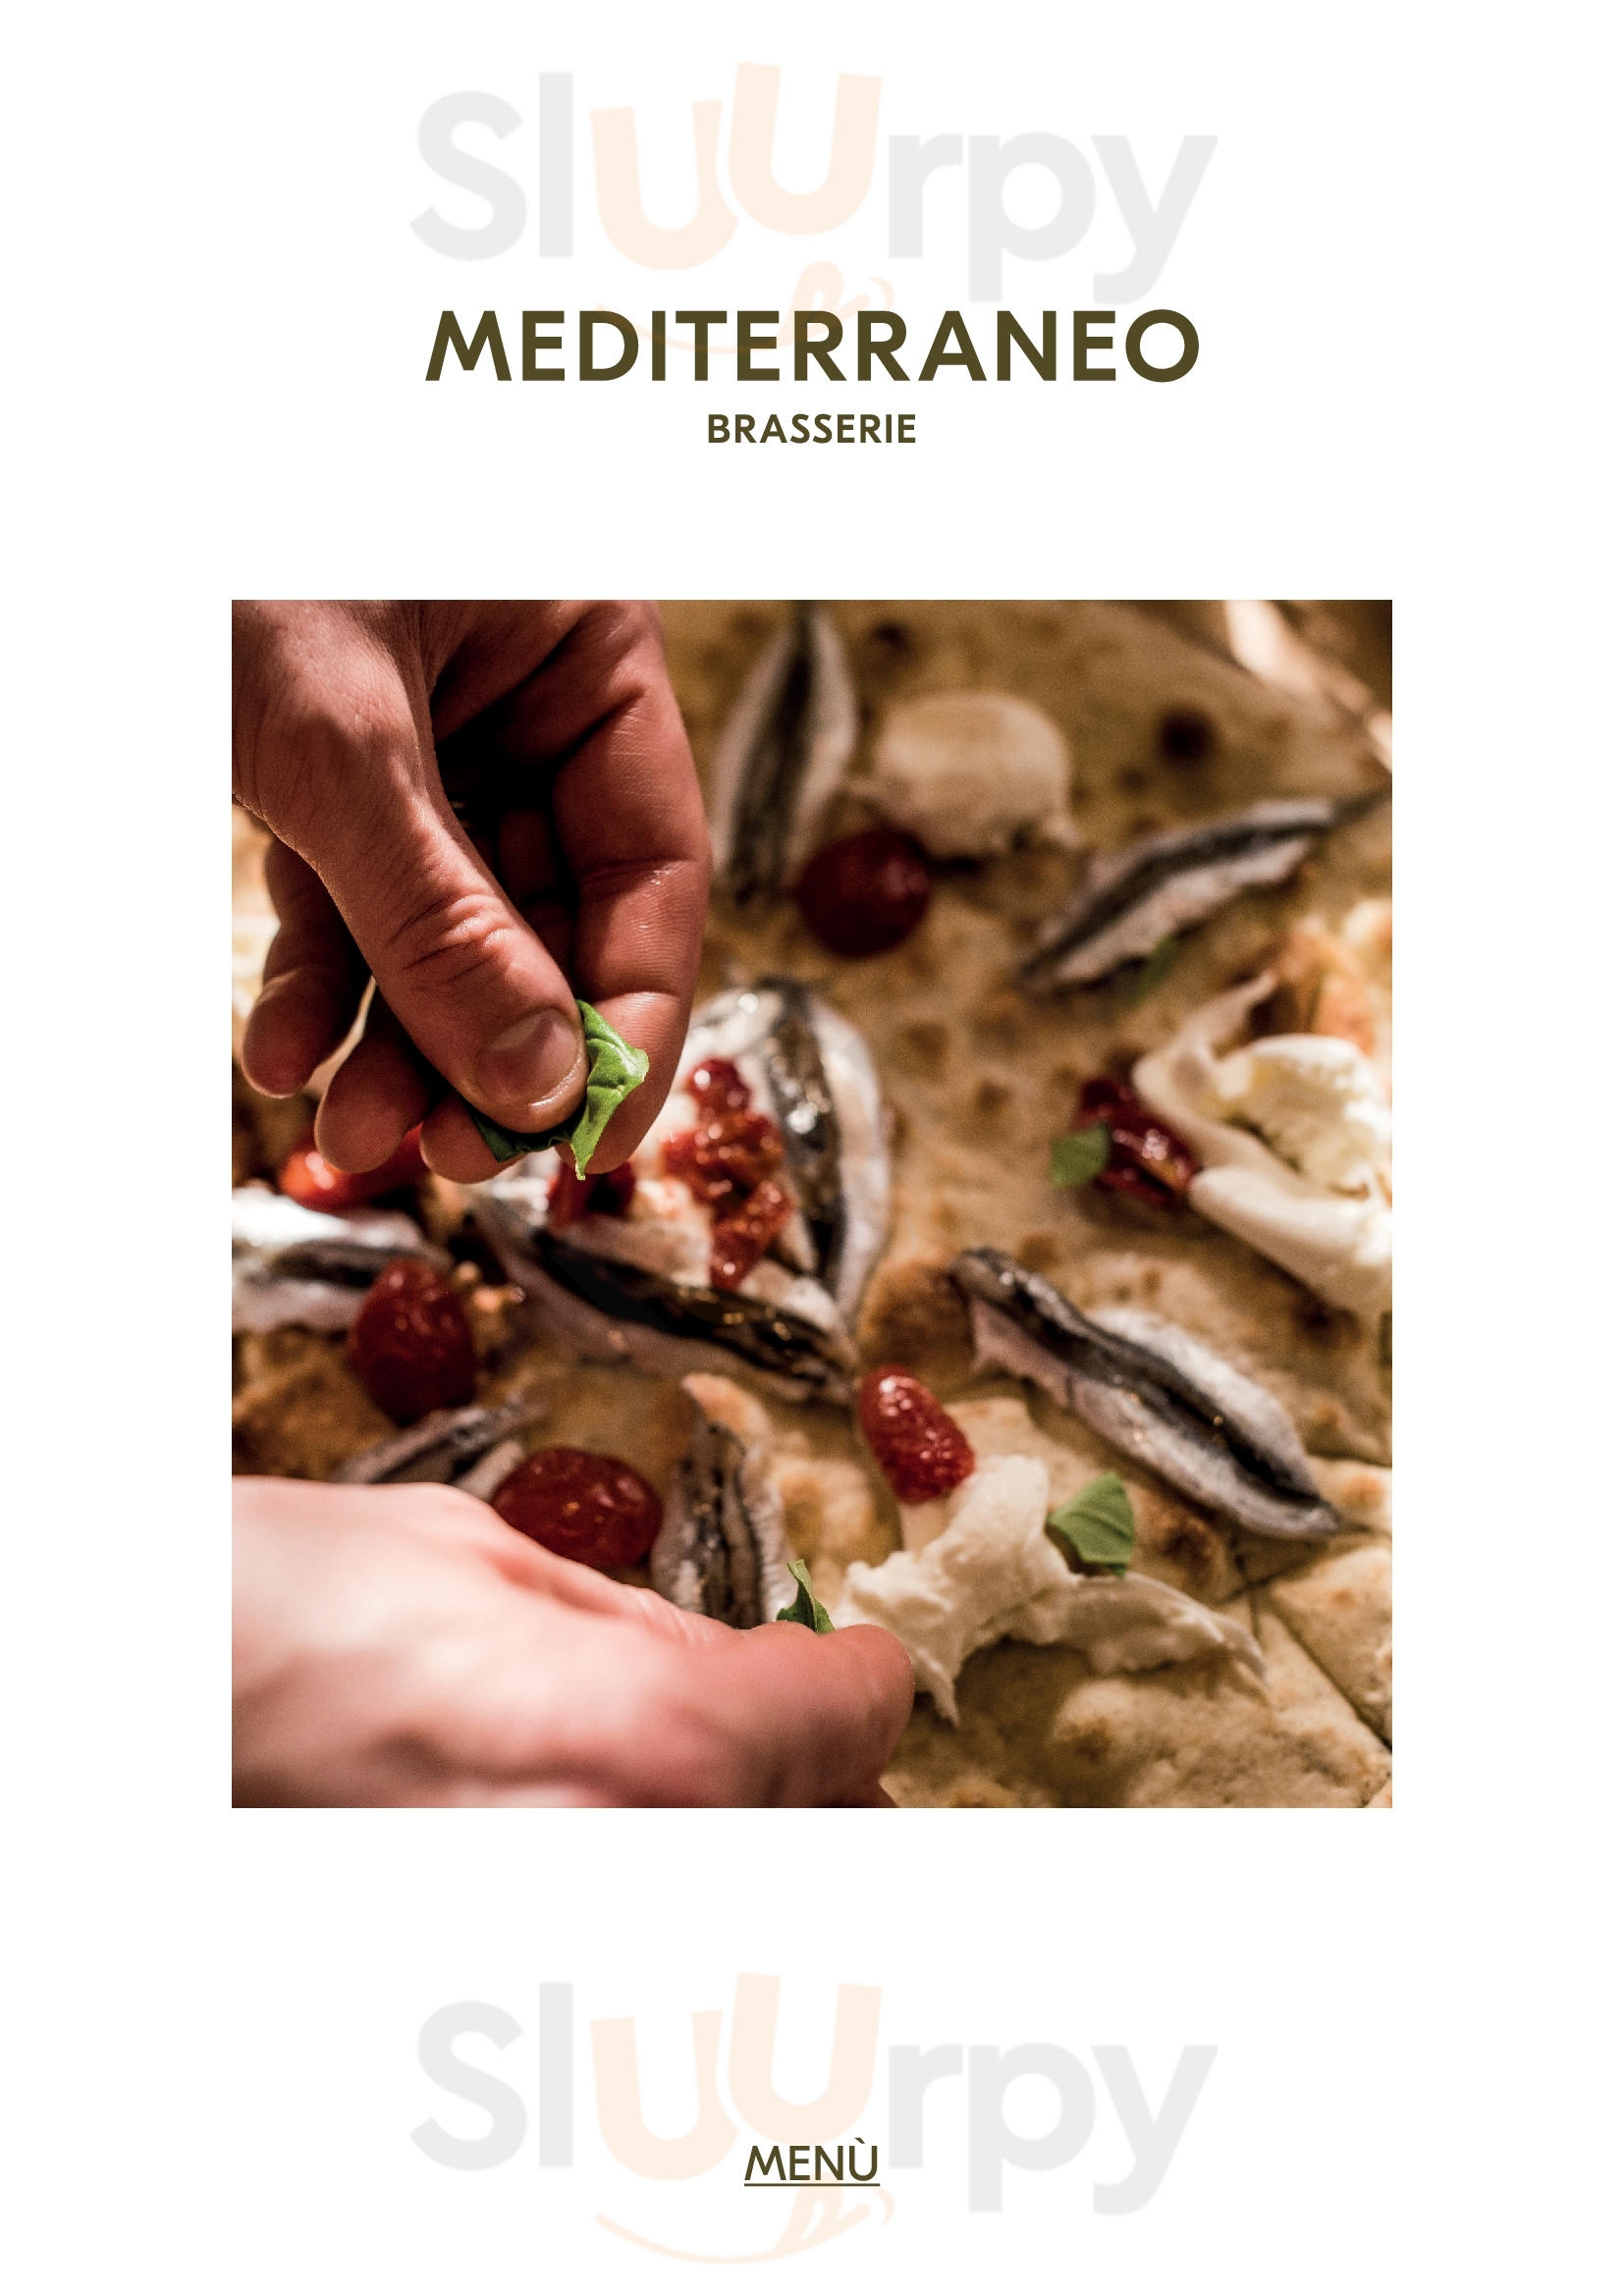 La Brasserie Mediterranea Schiavon menù 1 pagina